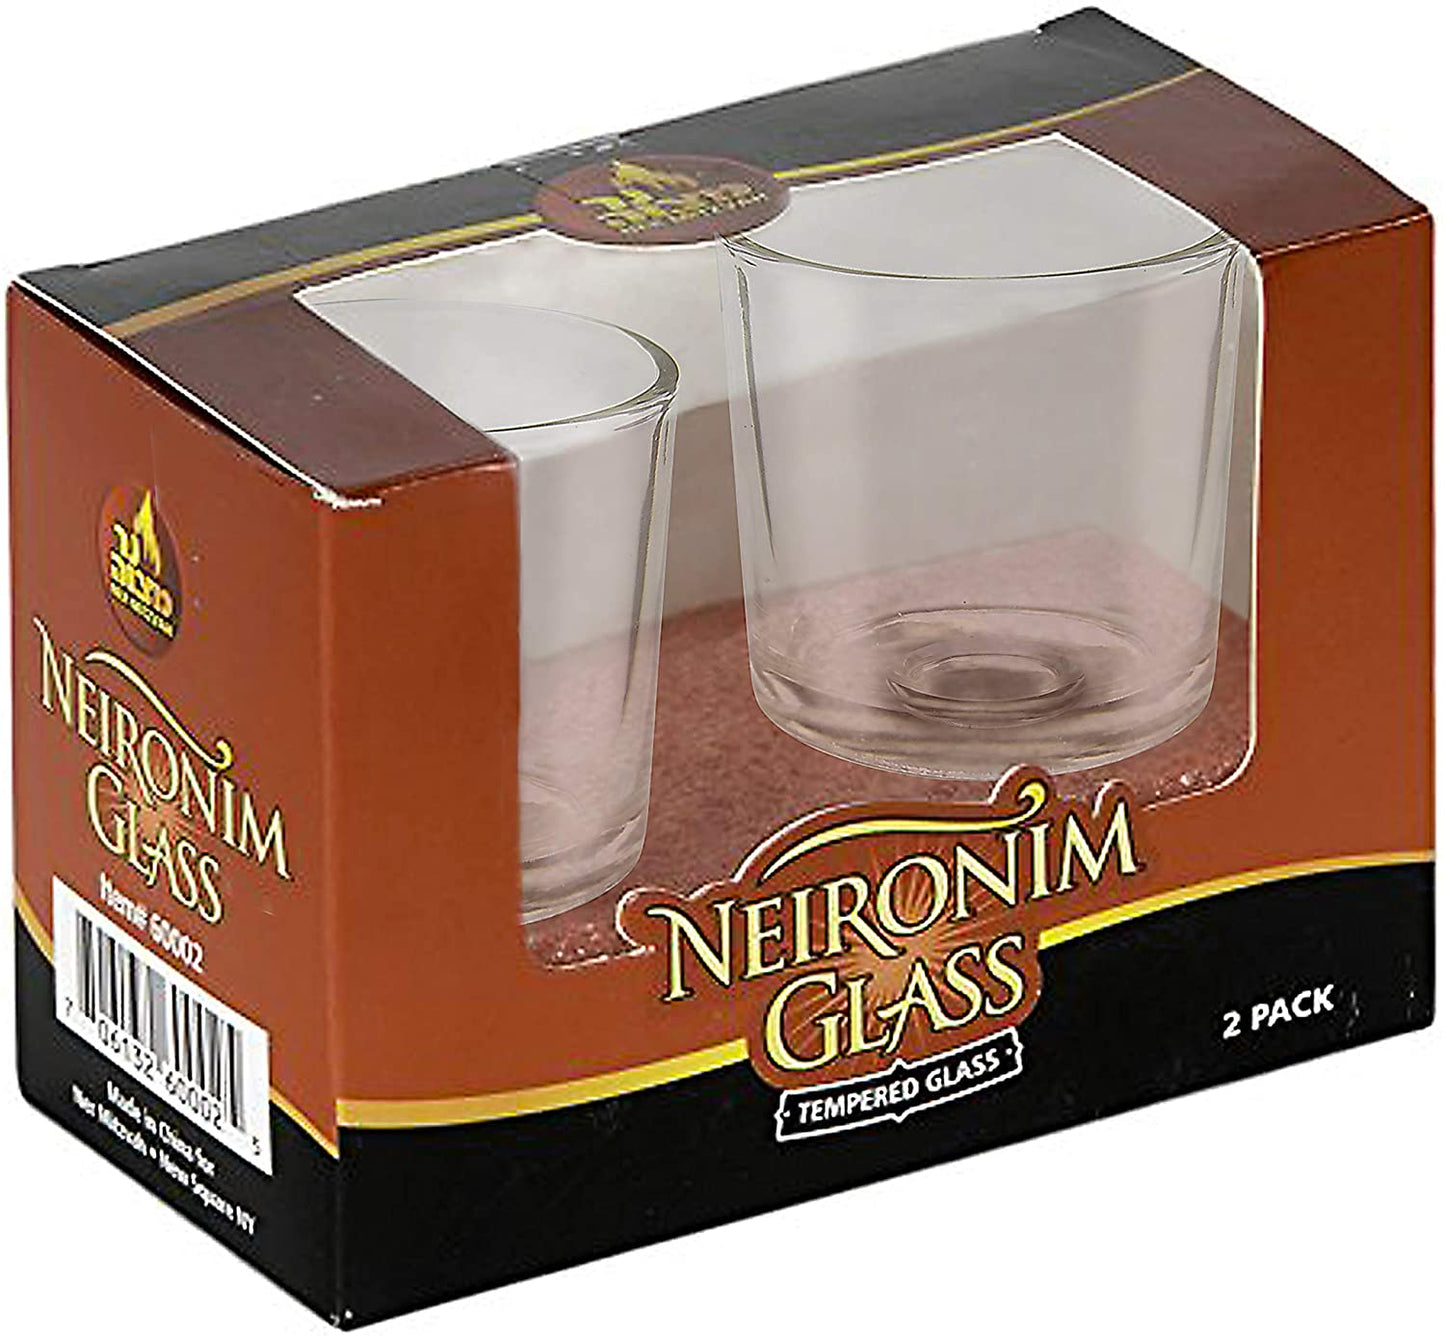 Neironim Glass 2-pack